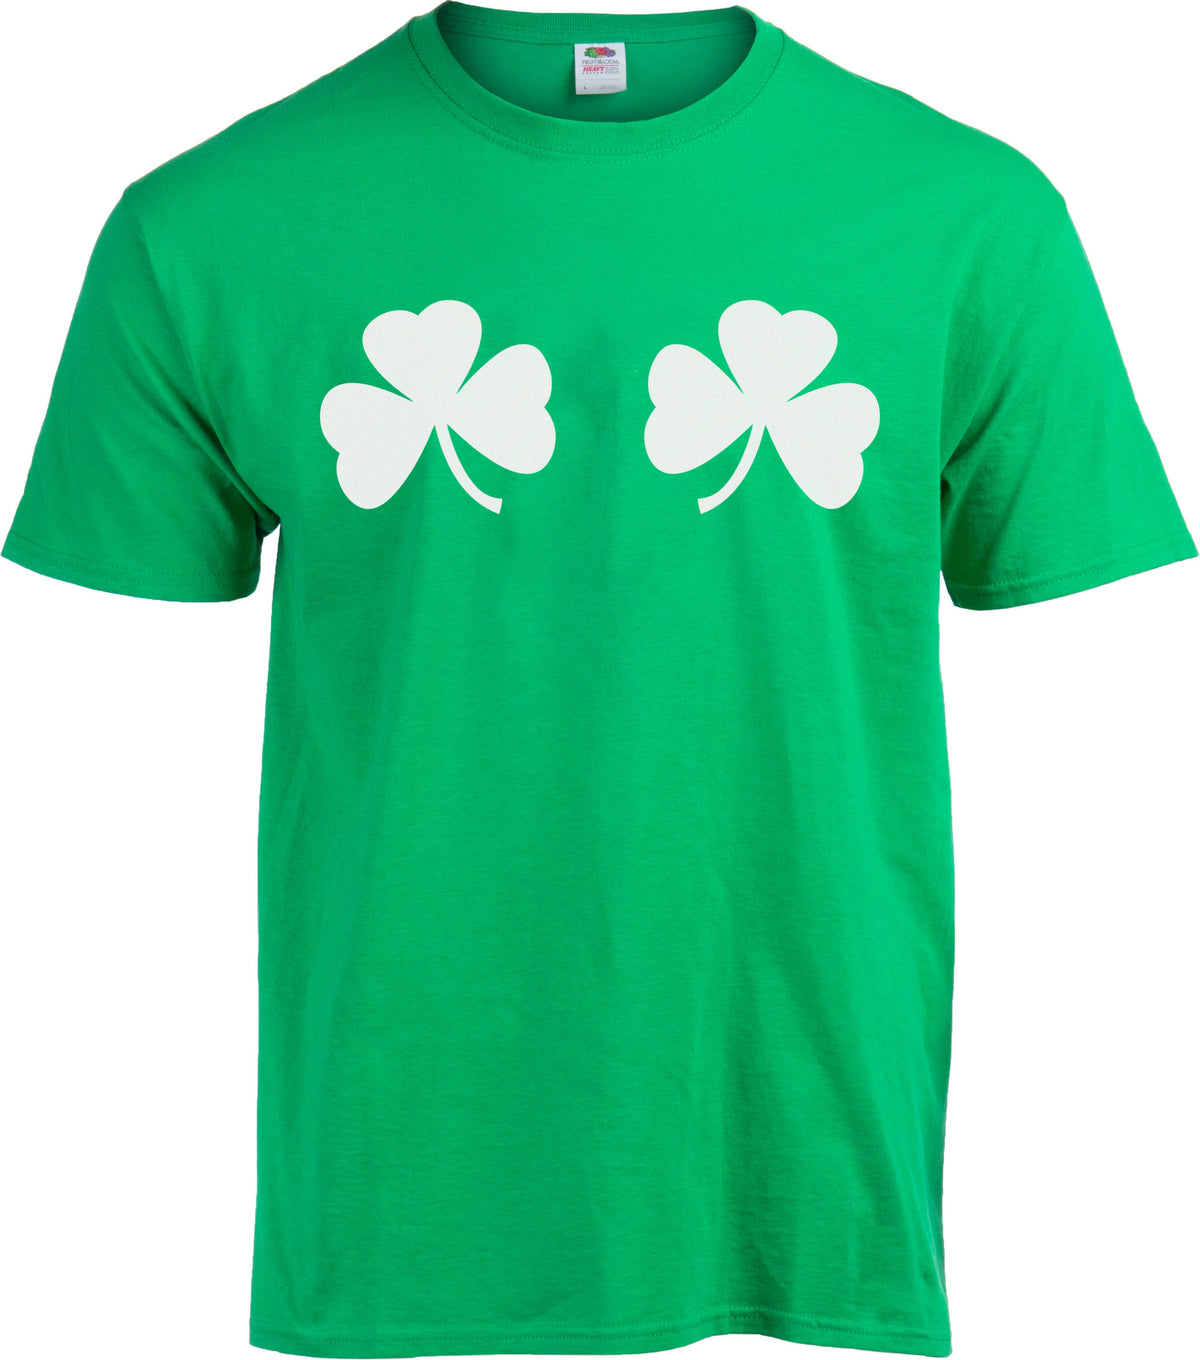 Nice Shamrocks - St. Patrick's Day Raunchy Humor Sex Party T-shirt - Men's/Unisex